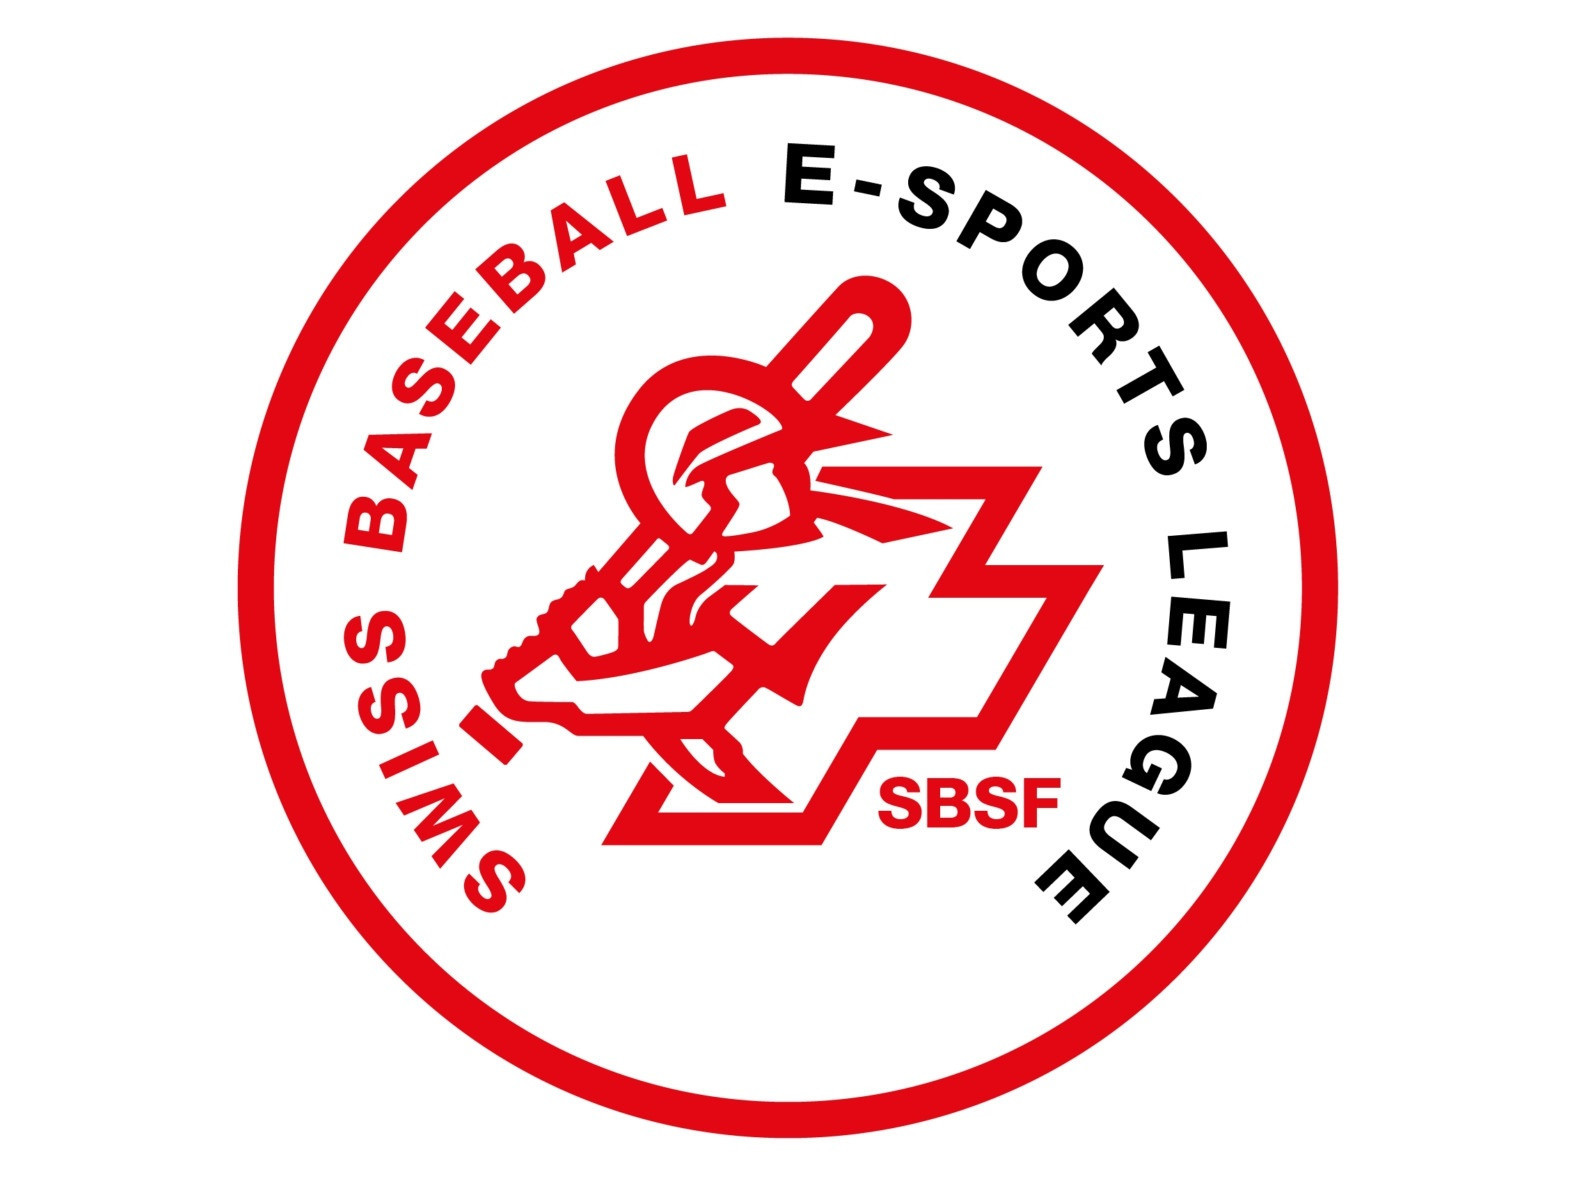 The Swiss Baseball E-Sports League is set to start on January 11 ©SBSF